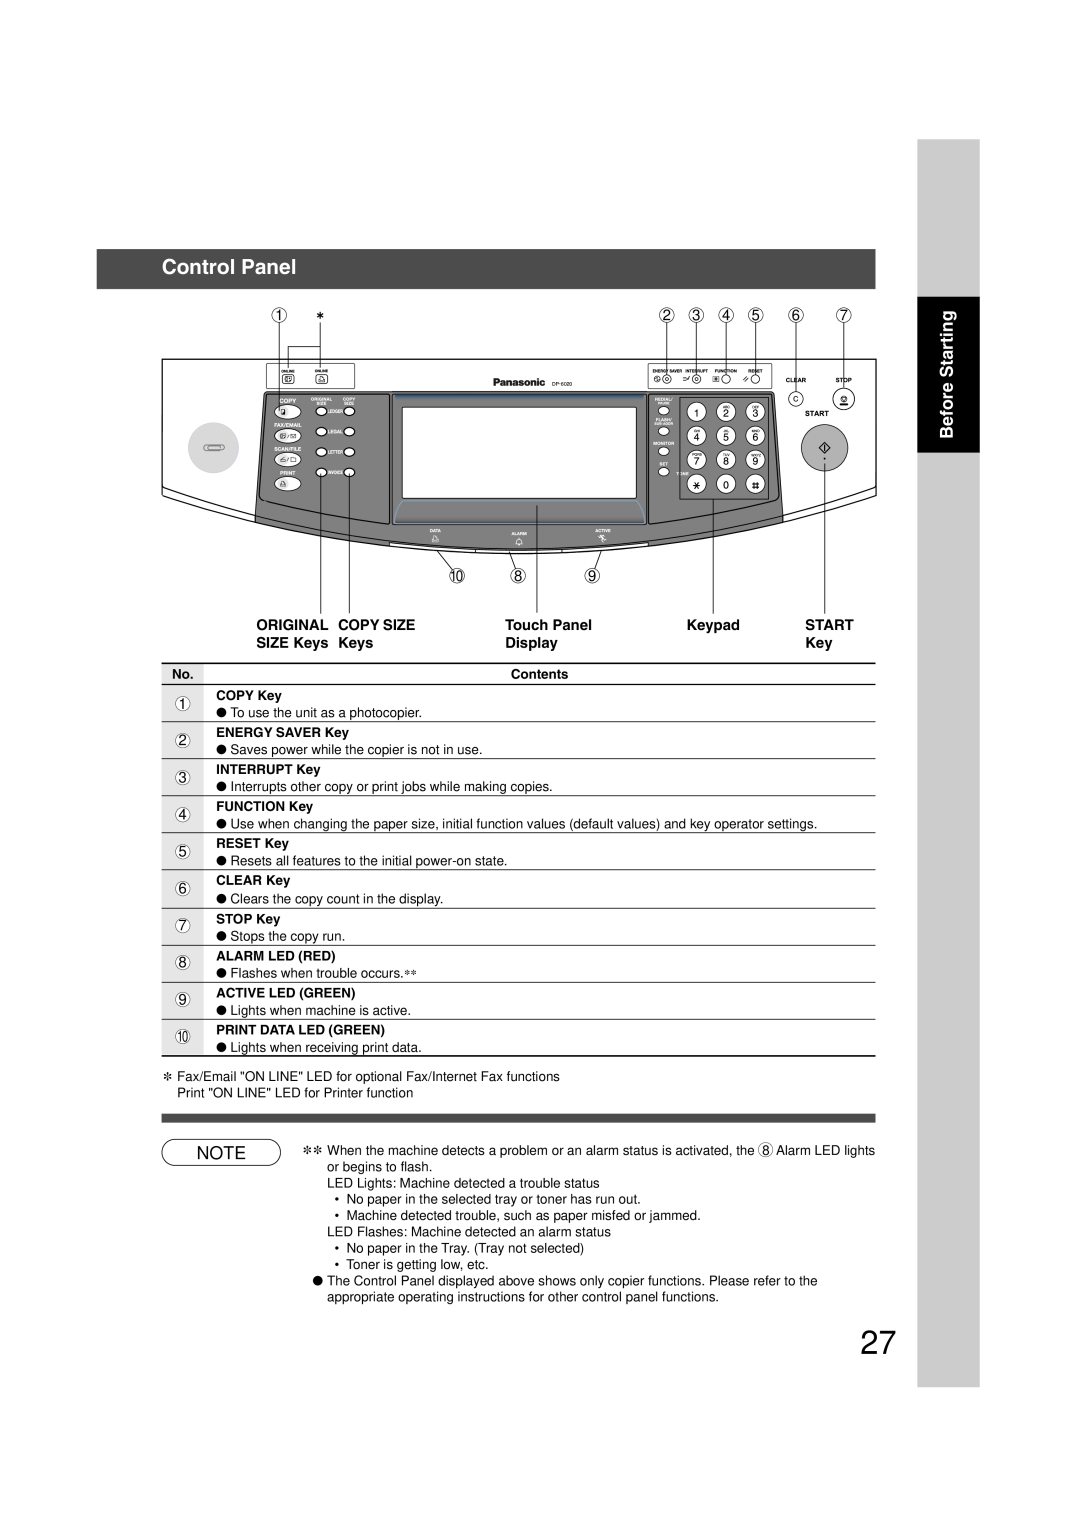 Panasonic 6020, 4520 manual Control Panel, Before Starting, Original Copy Size, Touch Panel, Keypad, SIZE Keys Keys, Display 